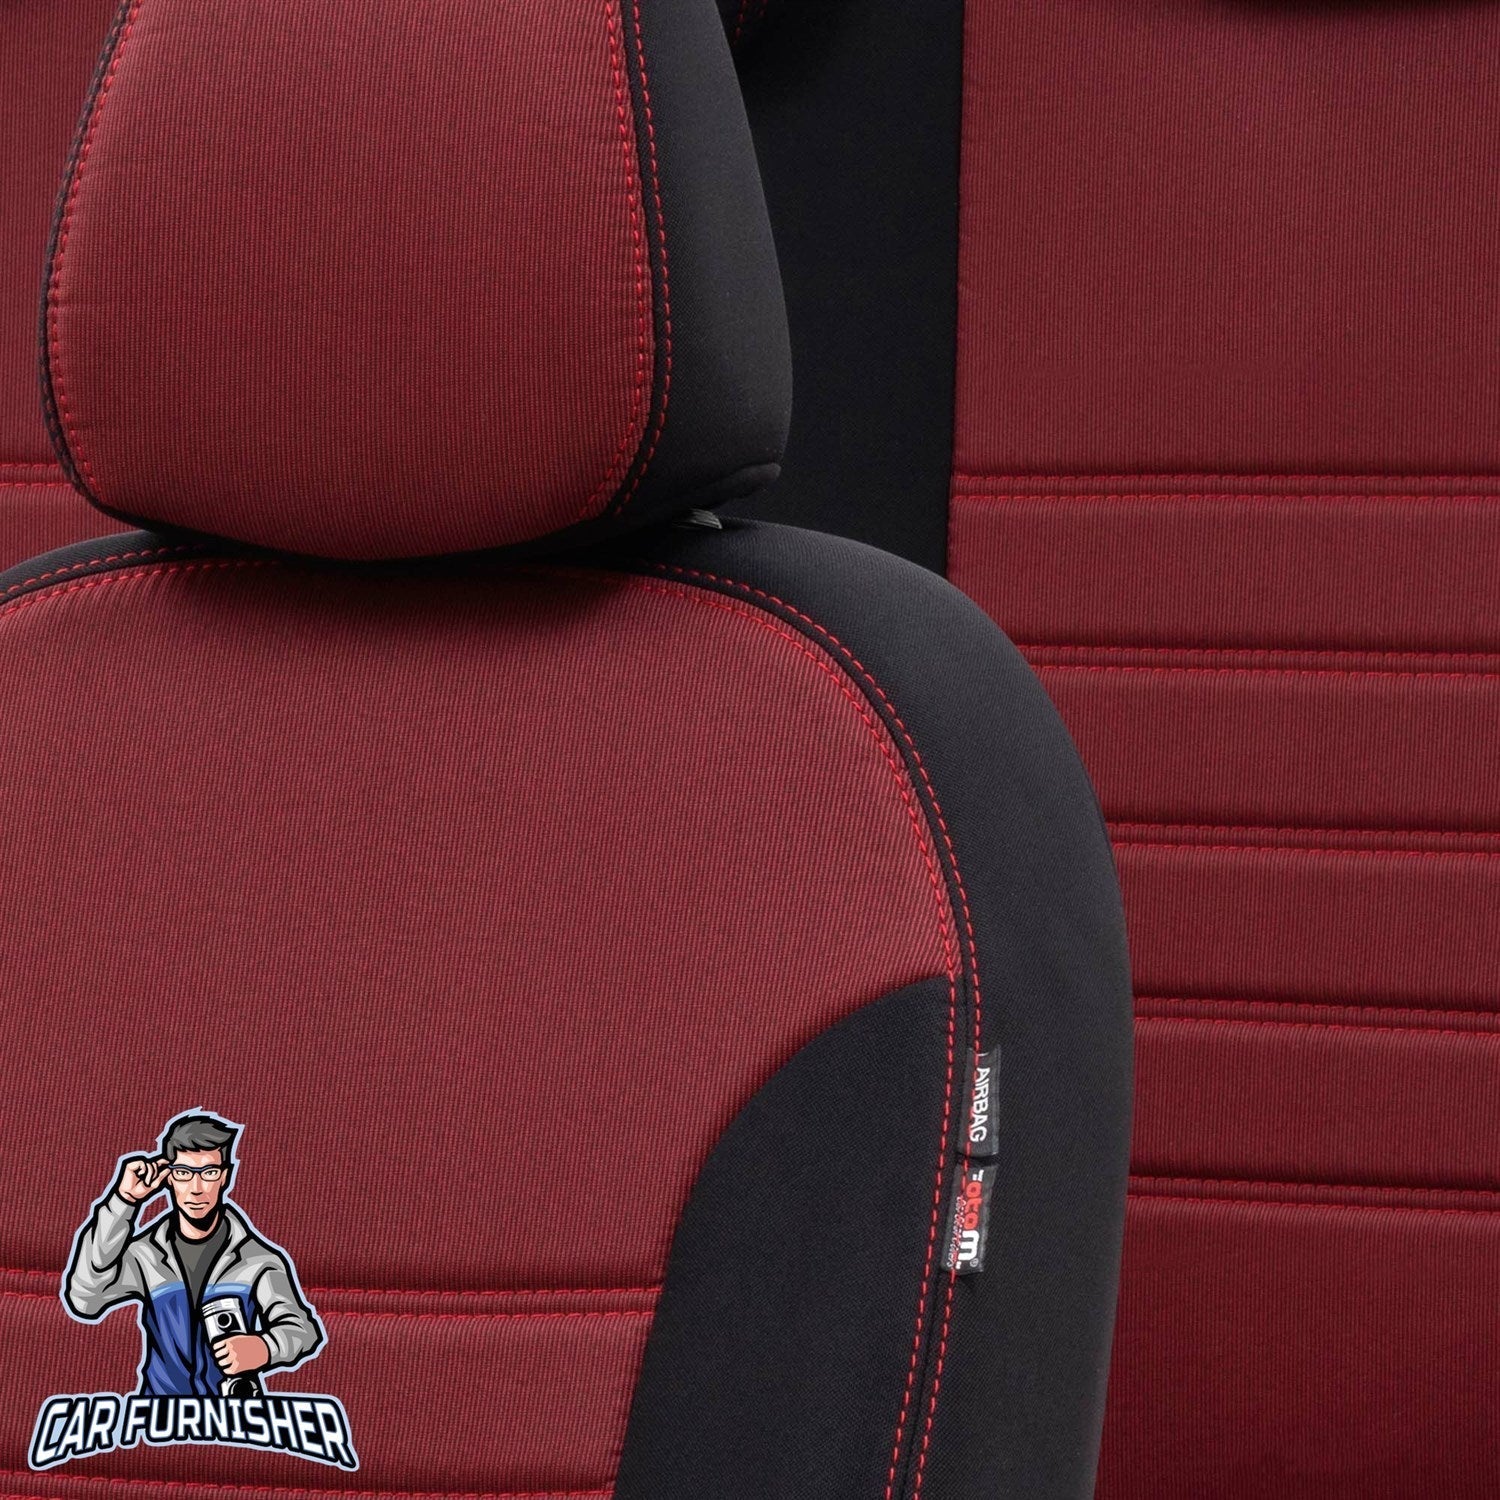 Opel Meriva Seat Covers Original Jacquard Design Red Jacquard Fabric